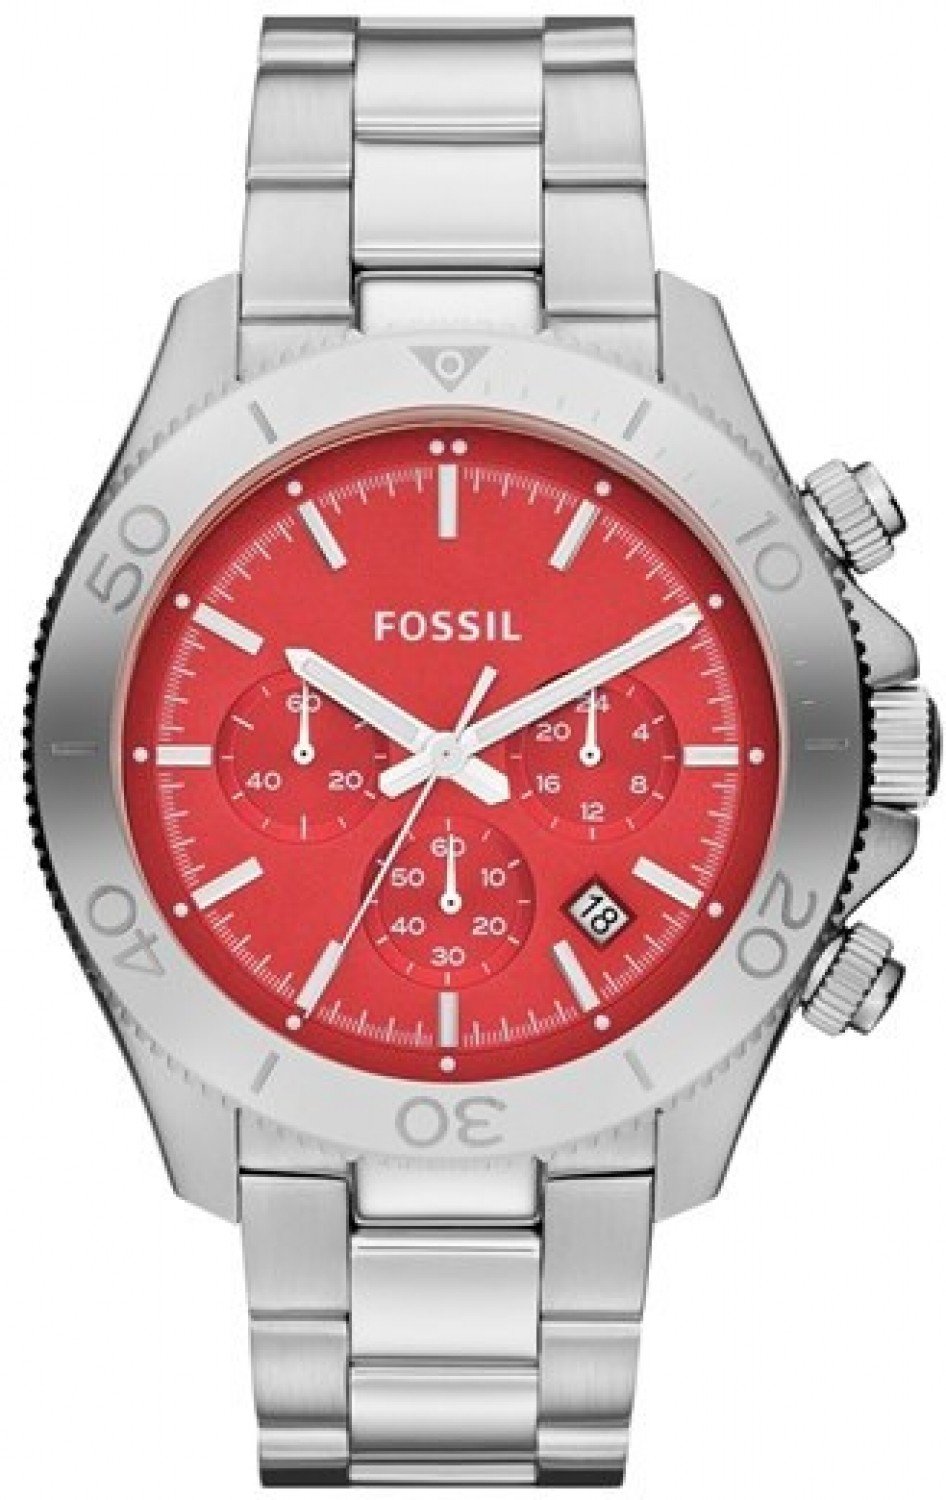 Arriba 59+ imagen red fossil watch